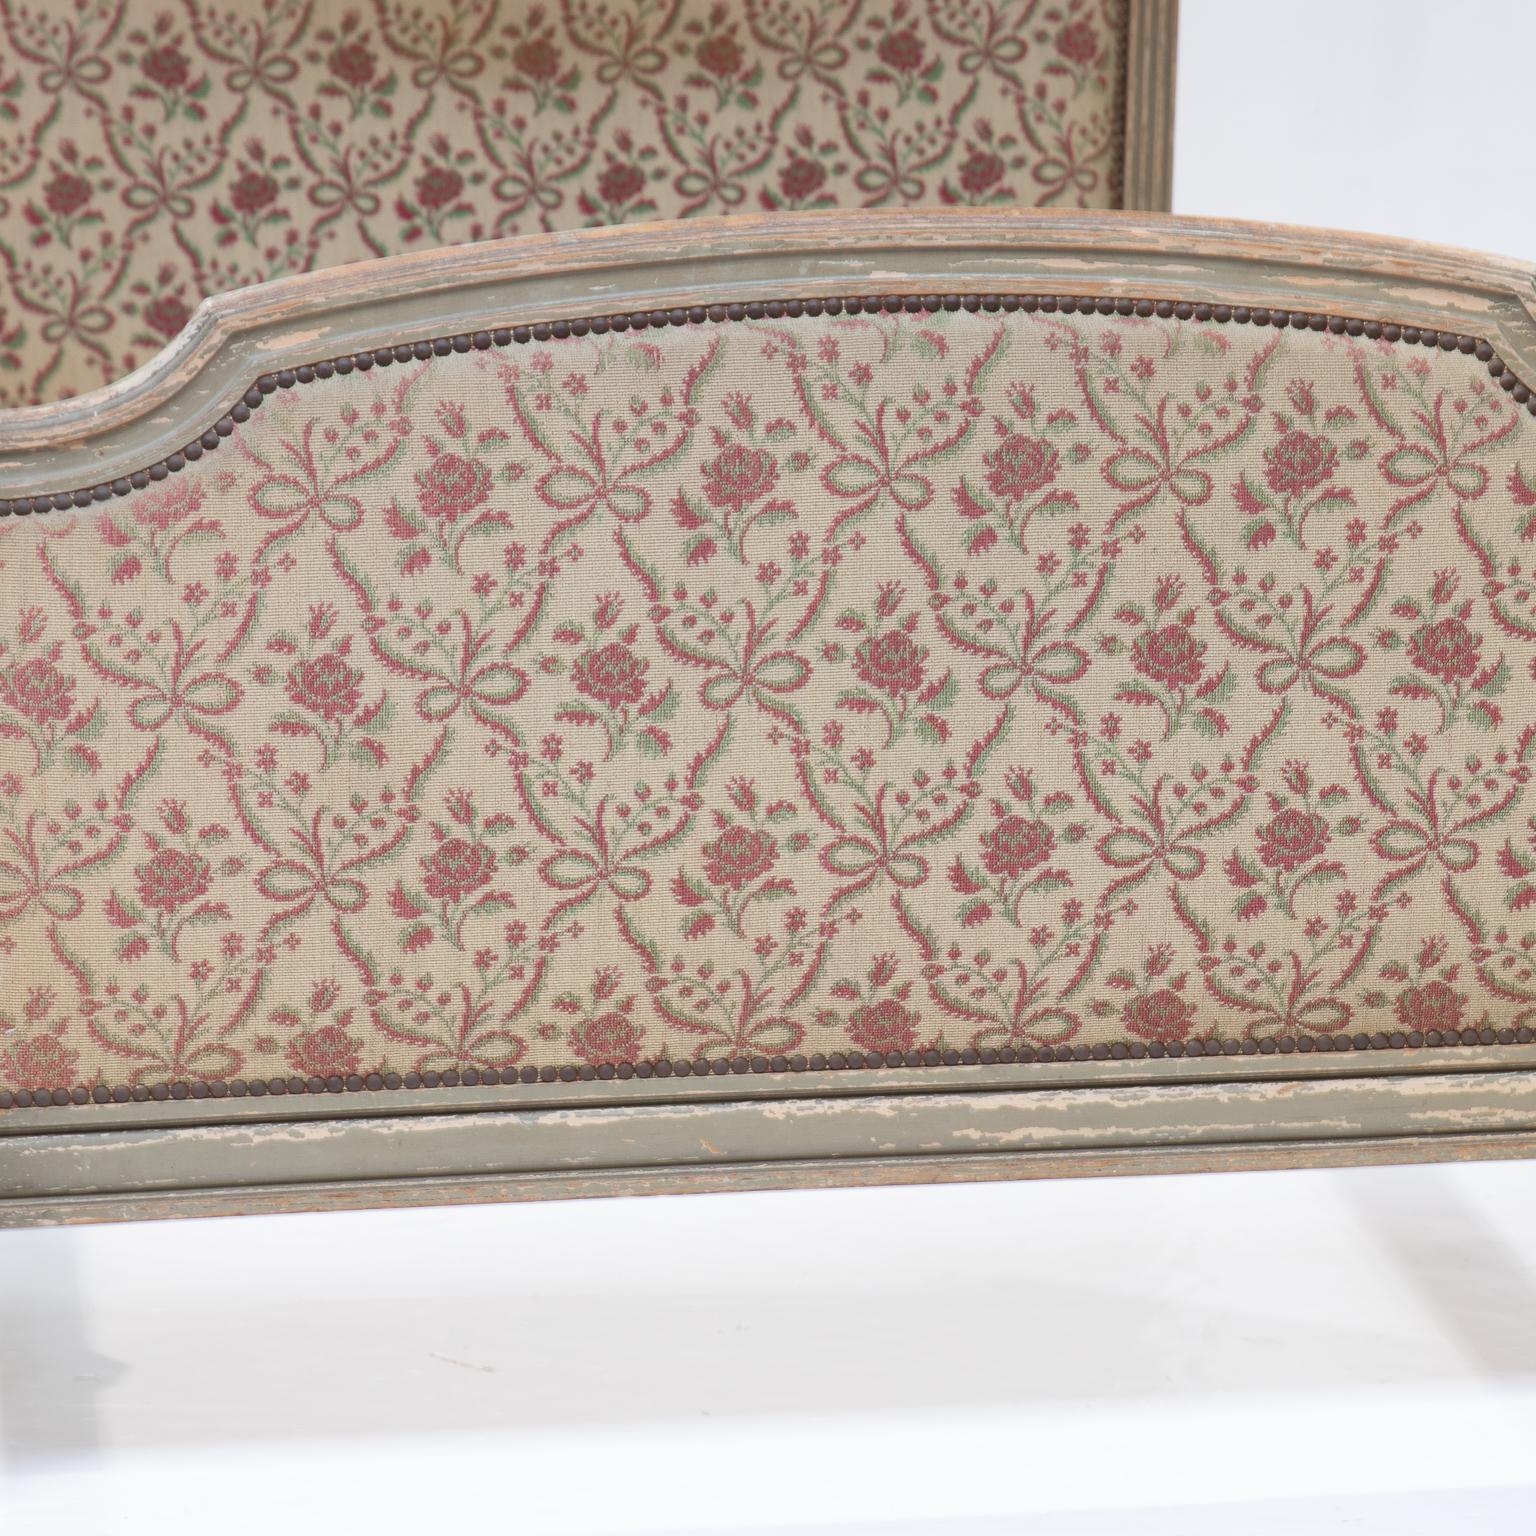 Pair of Louis XVI Style Painted Beds (Louis XVI.)